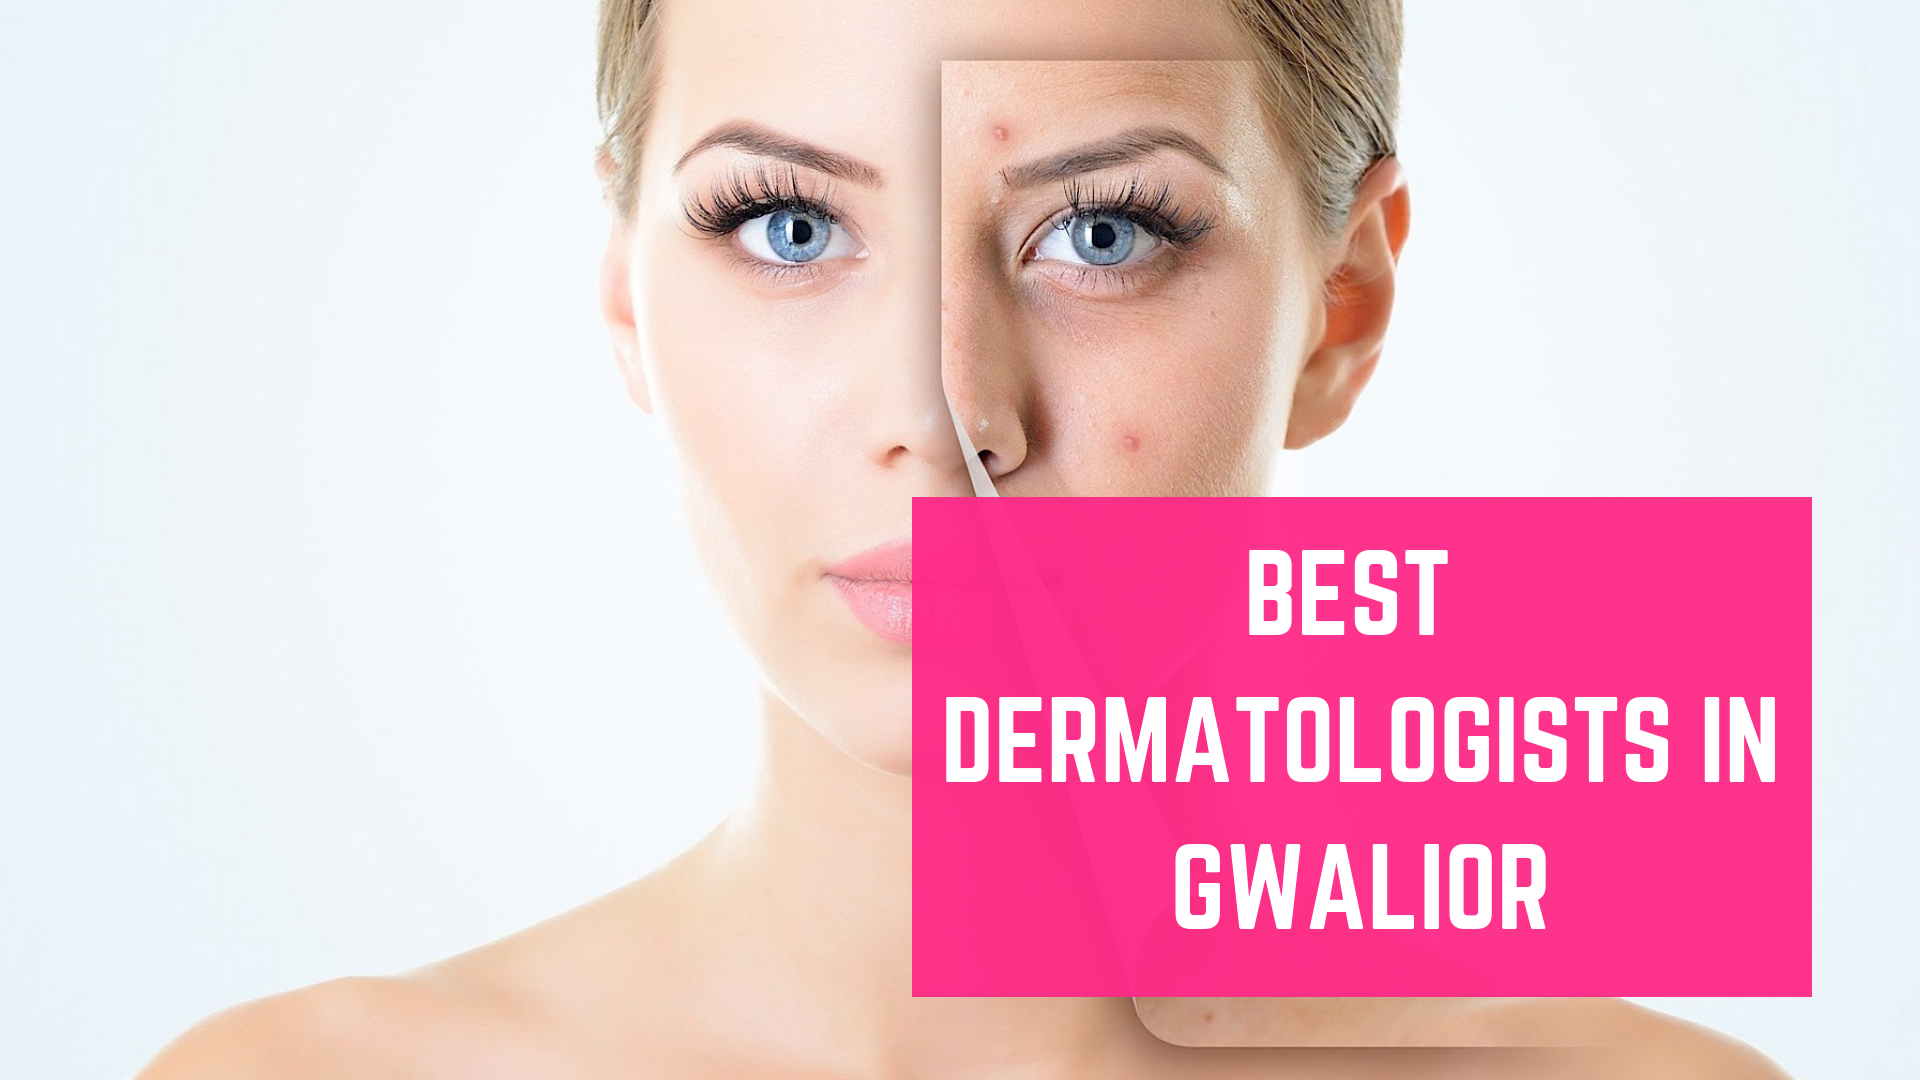 Top 10 Best Dermatologists in Gwalior - Essencz